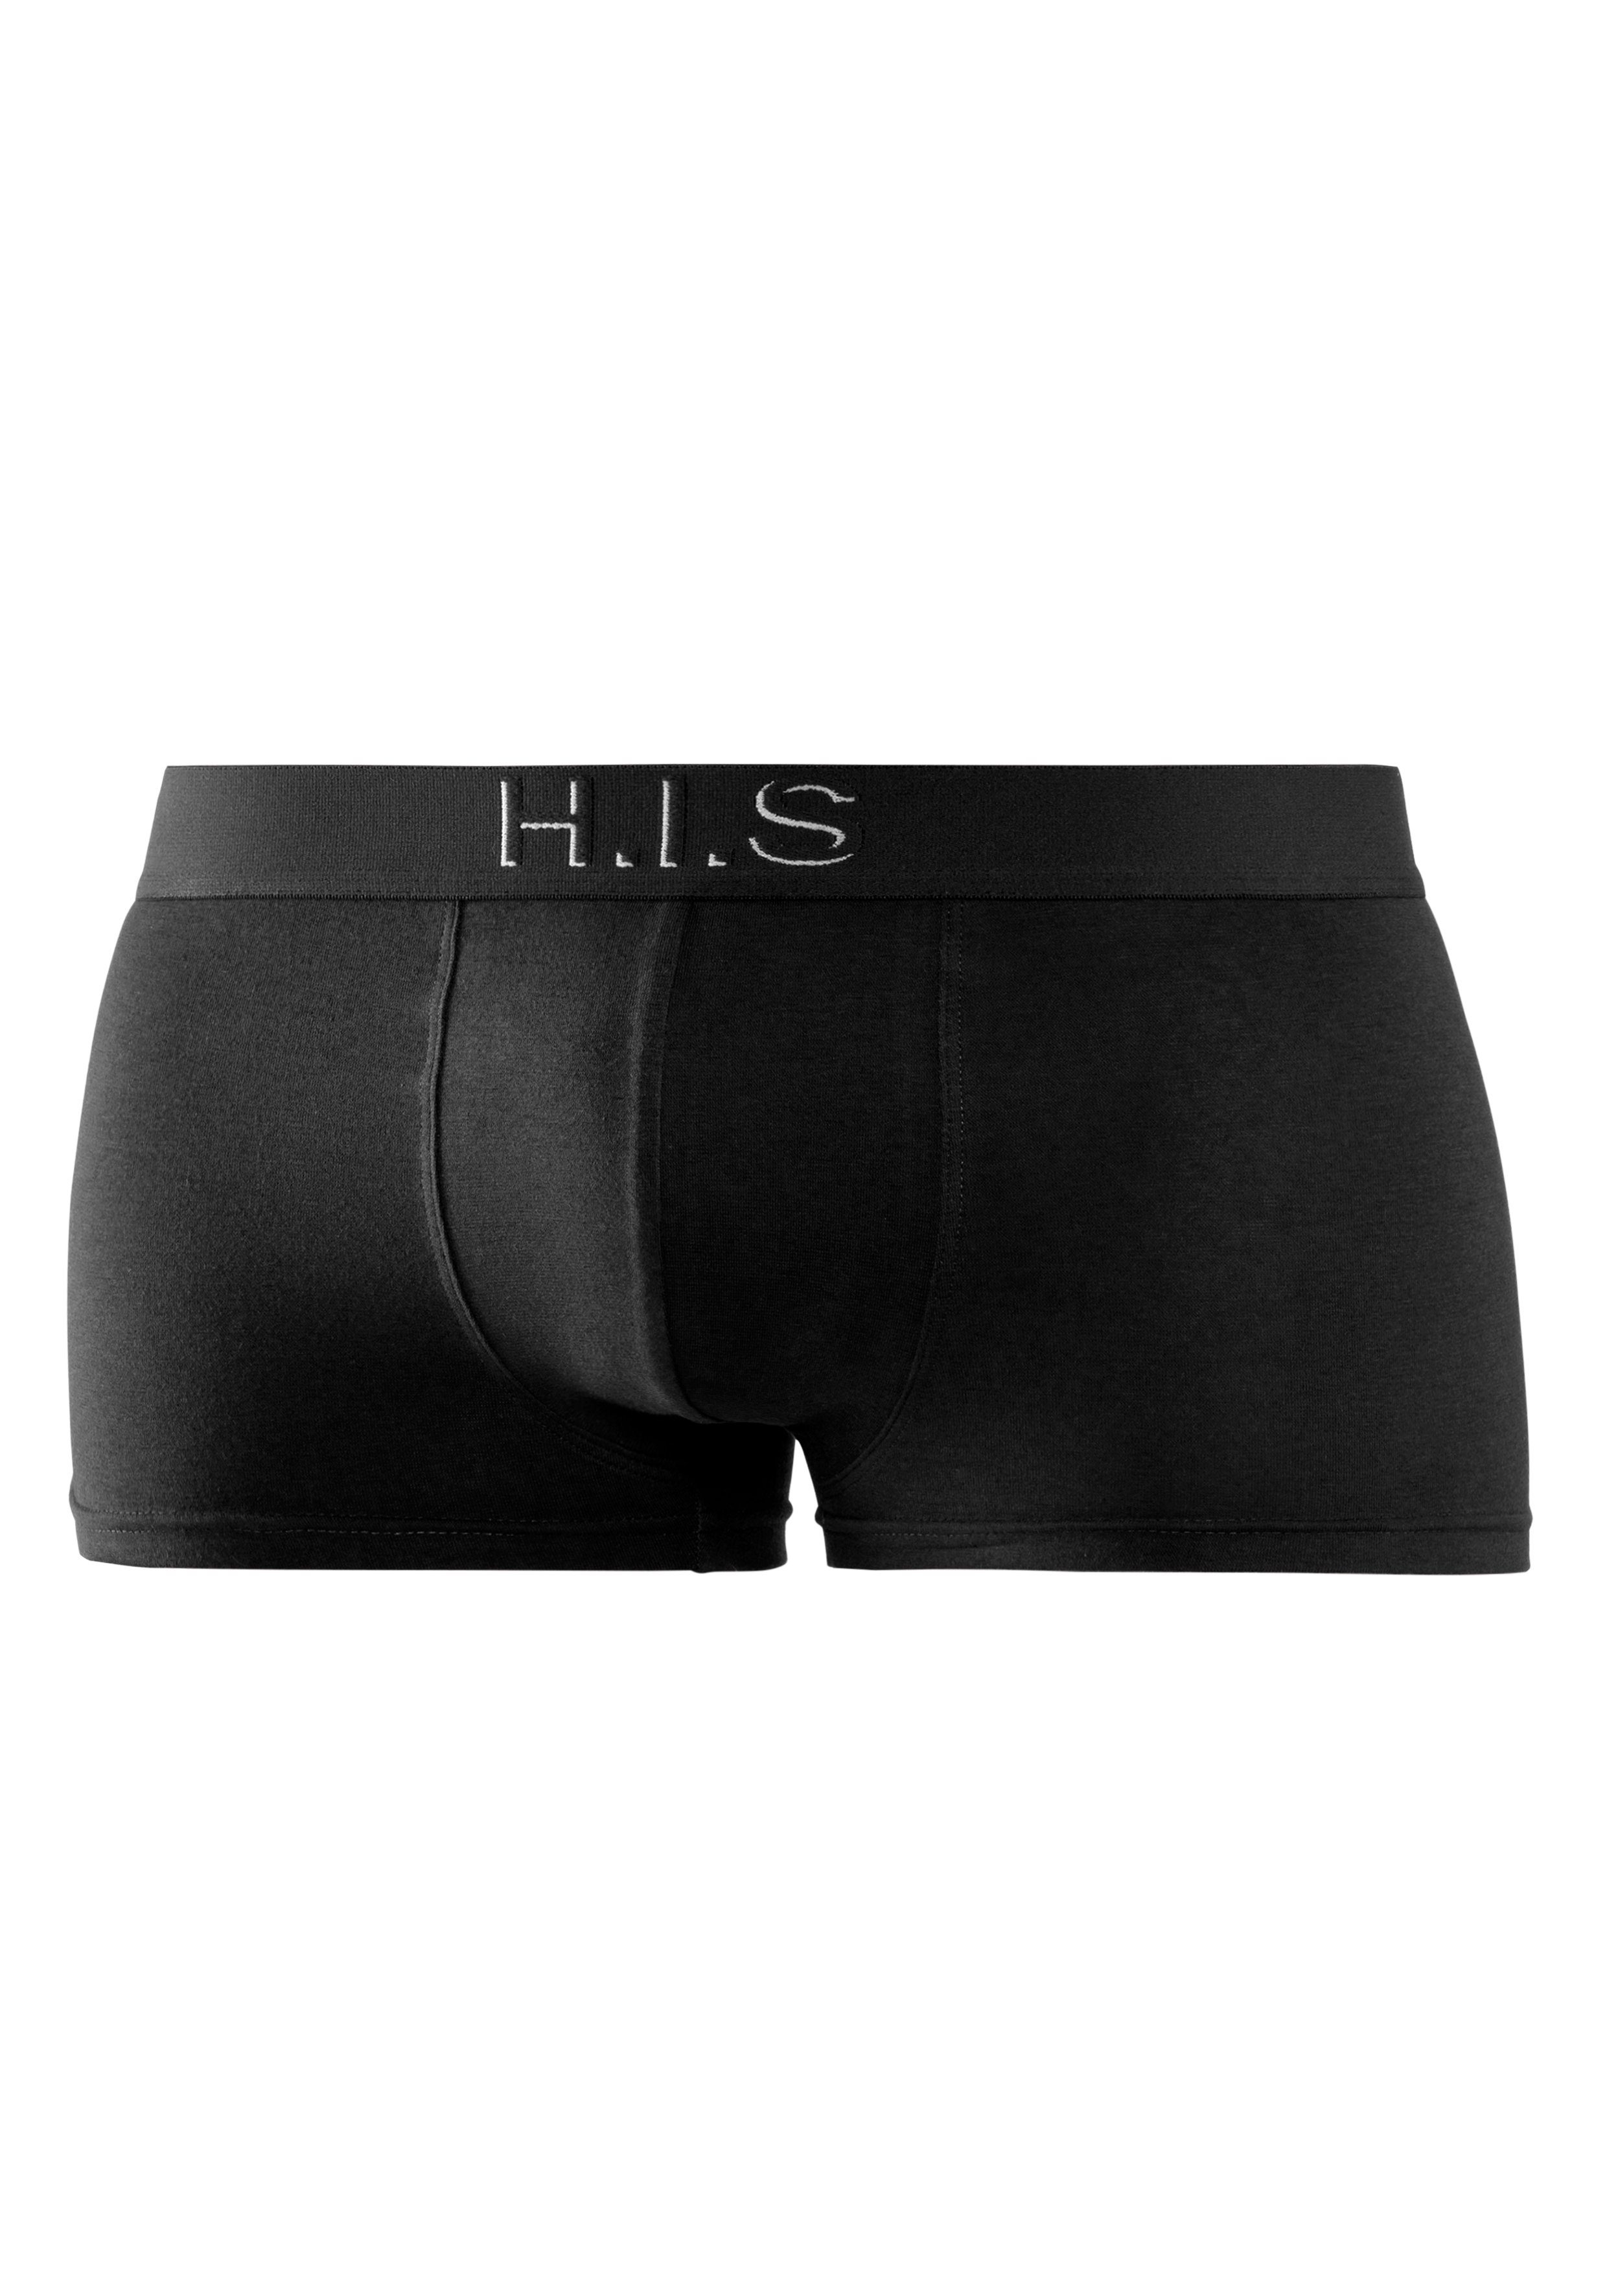 Logoschriftzug mit in schwarz, am 5-St) petrol, H.I.S Hipster-Form Boxershorts (Packung, Webbund mit navy bordeaux, 3D olivgrün, Effekt